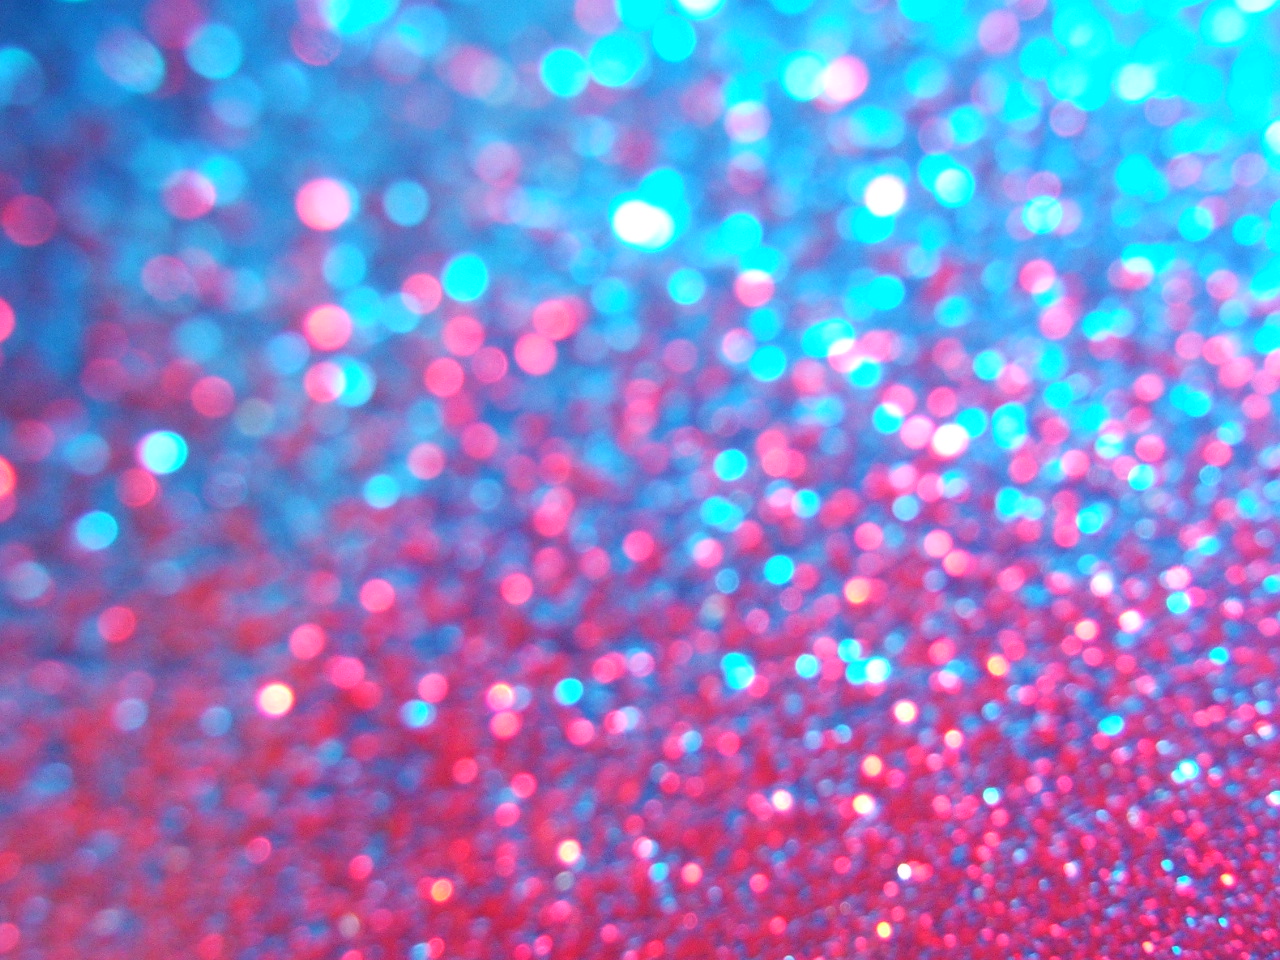 Rainbow Sparkles and Glitter